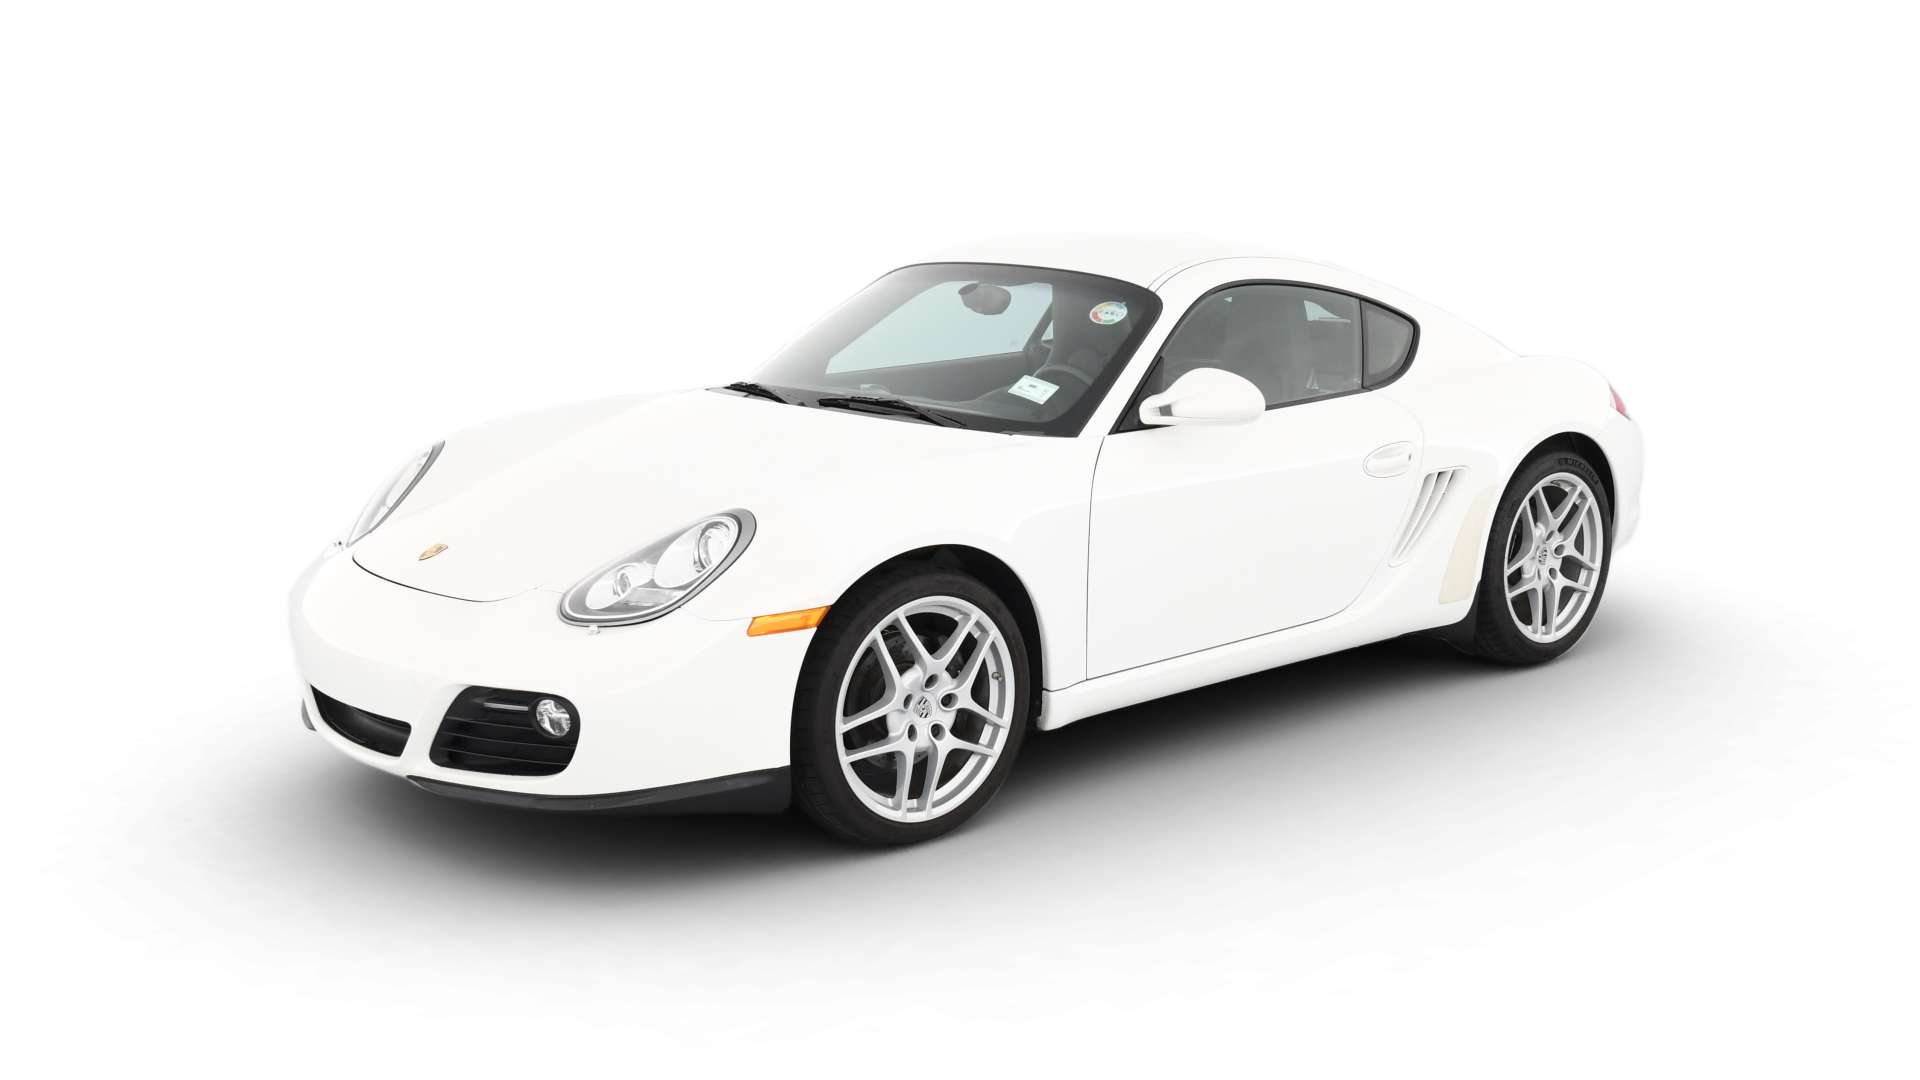 Porsche Cayman model image.